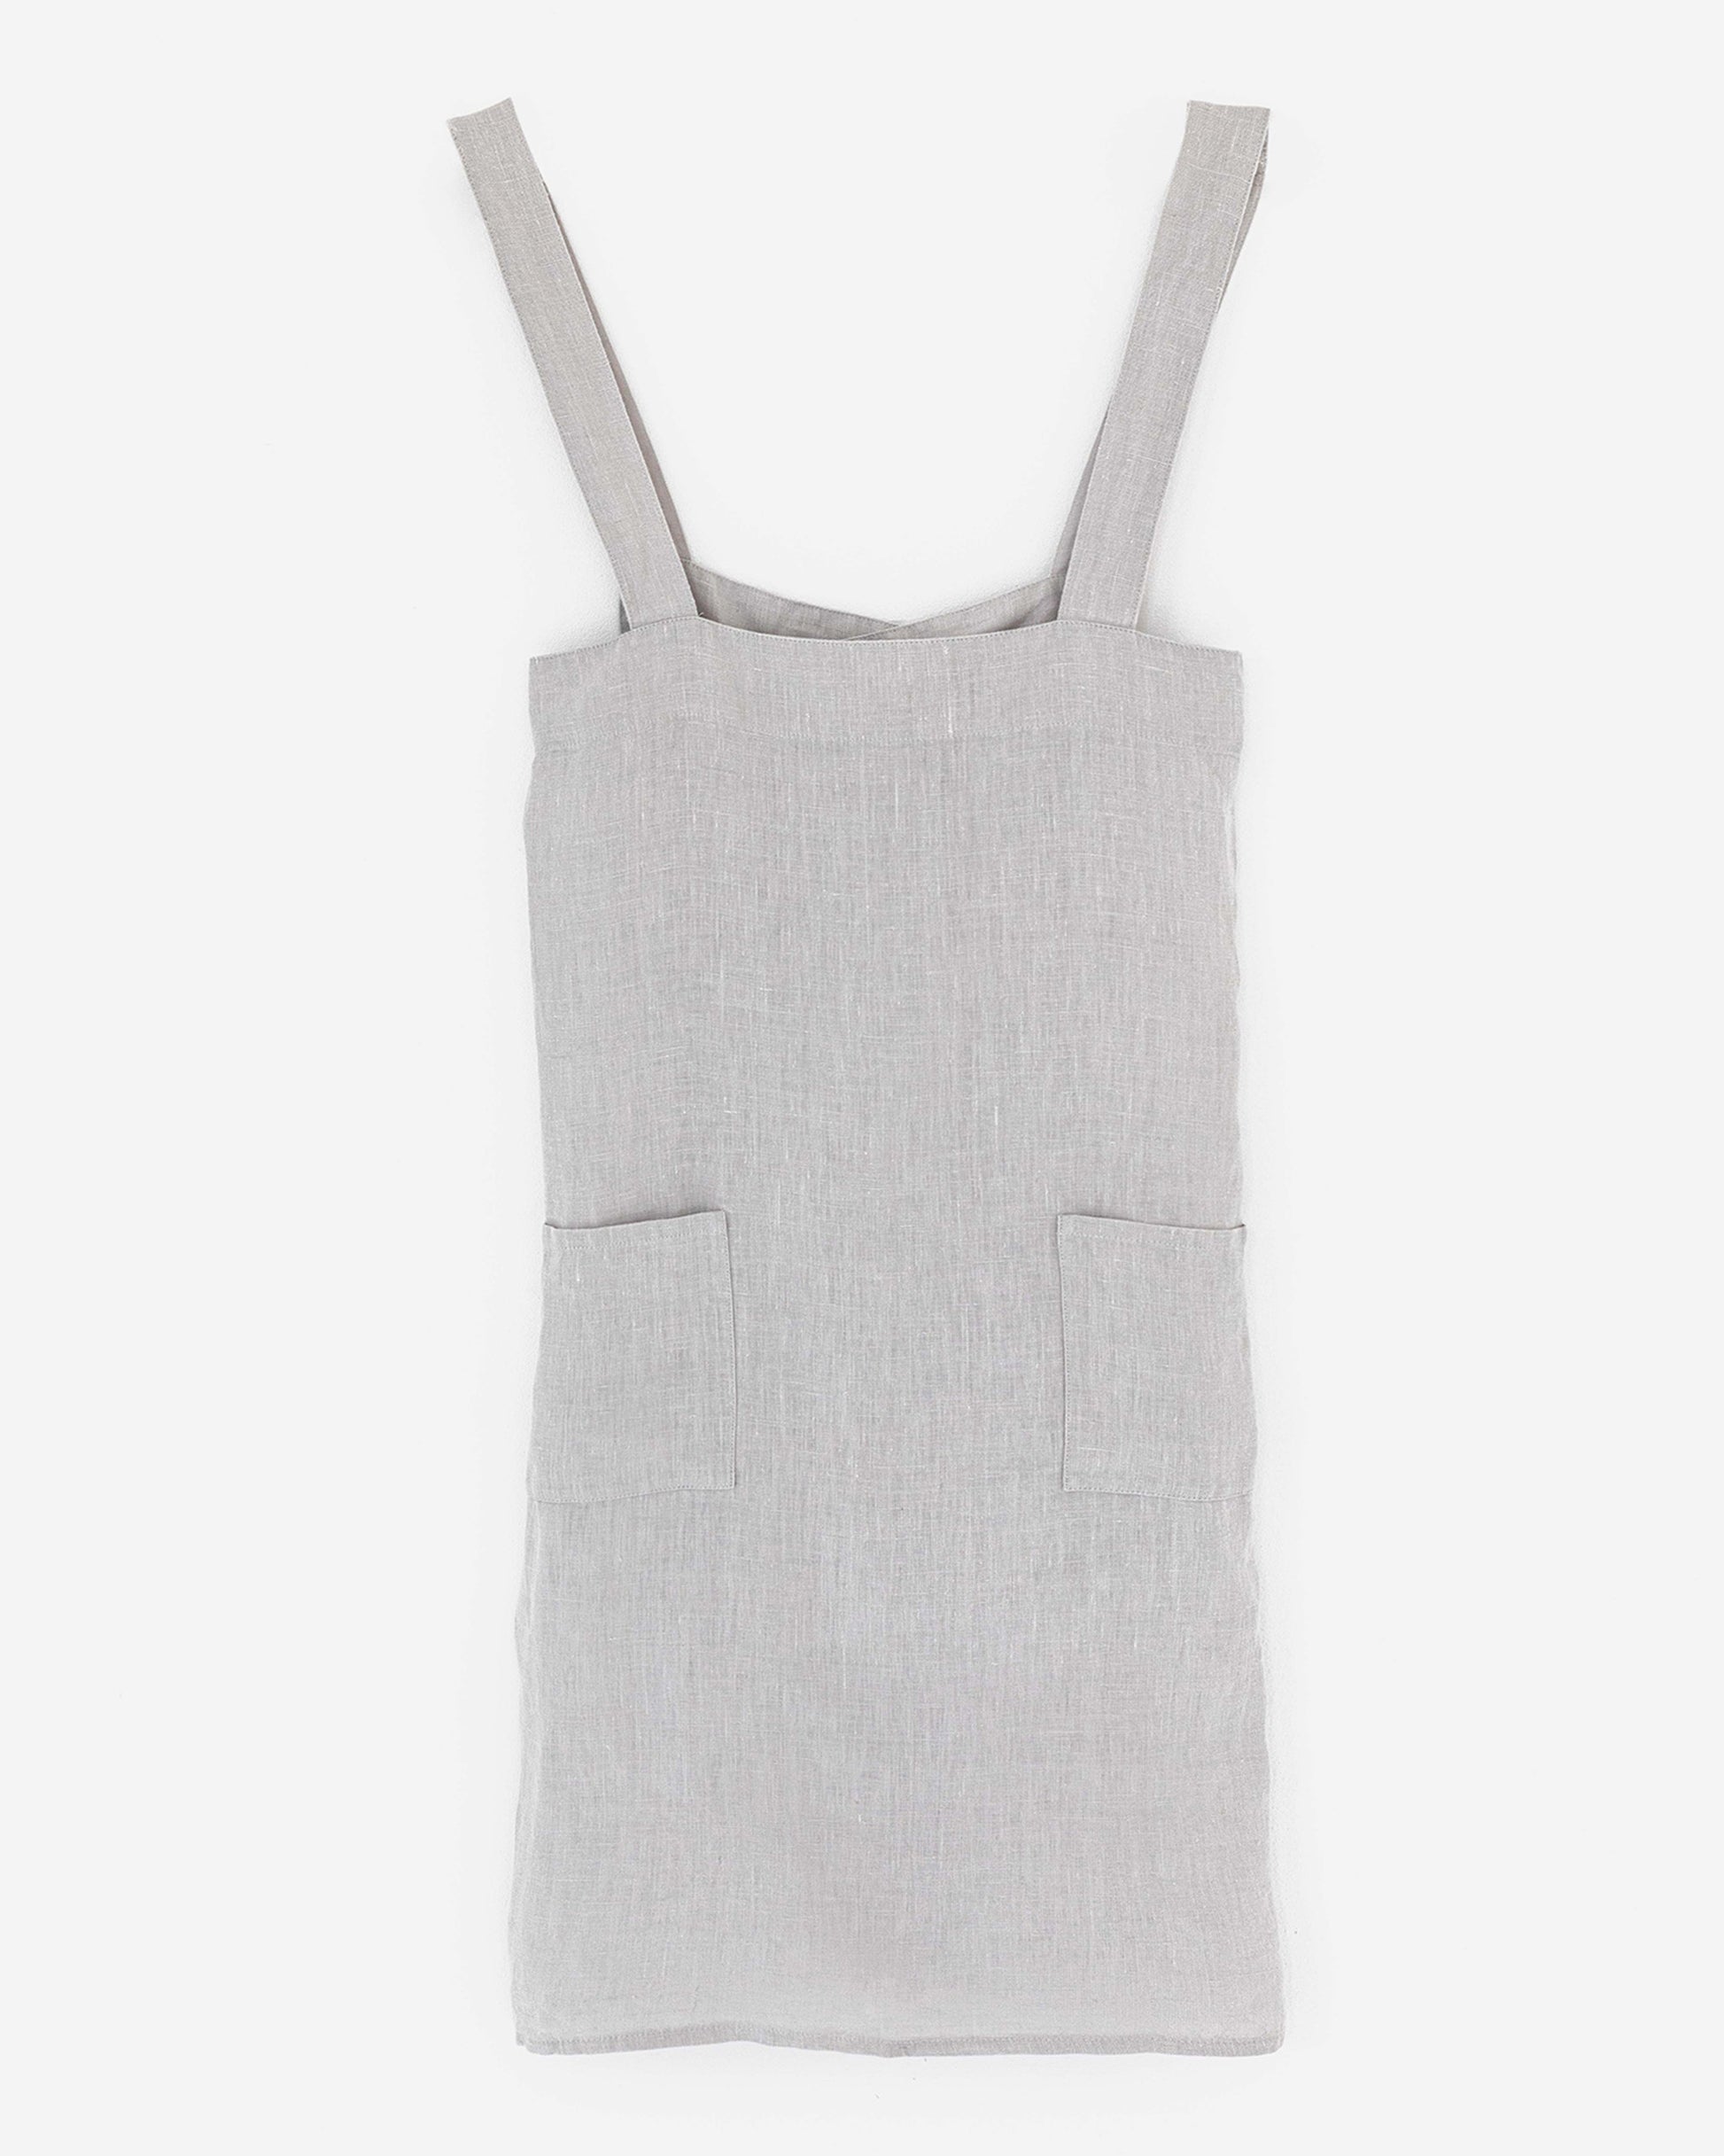 Japanese cross-back linen apron in Light gray - MagicLinen